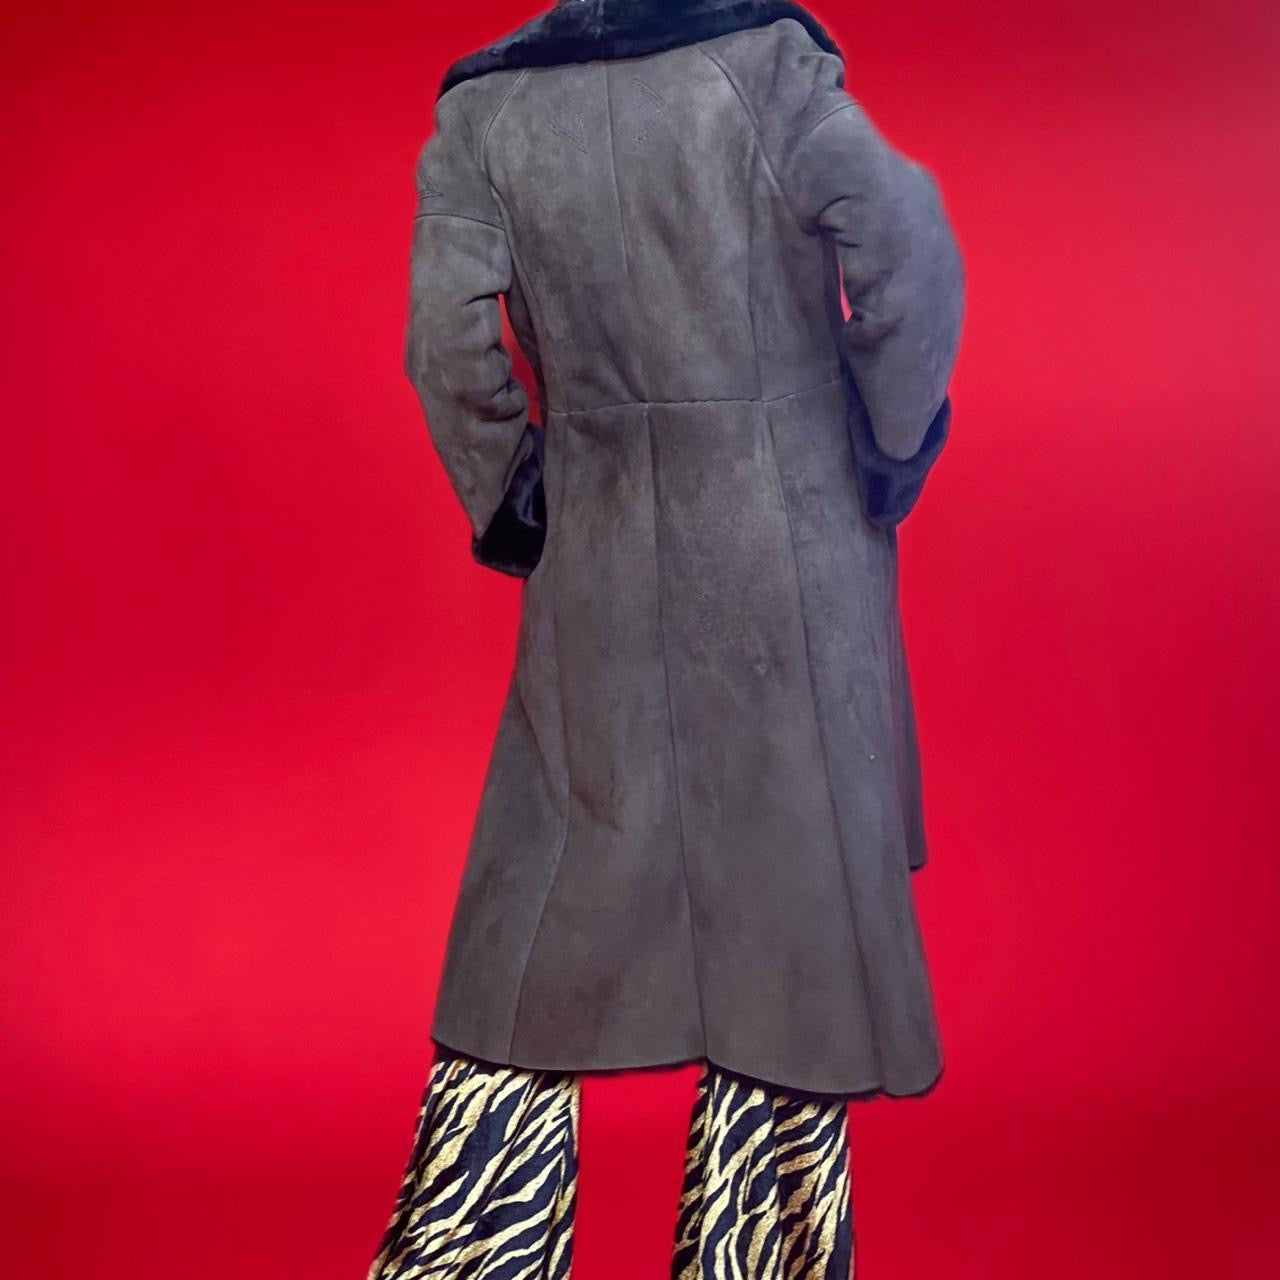 Vintage long suede coat